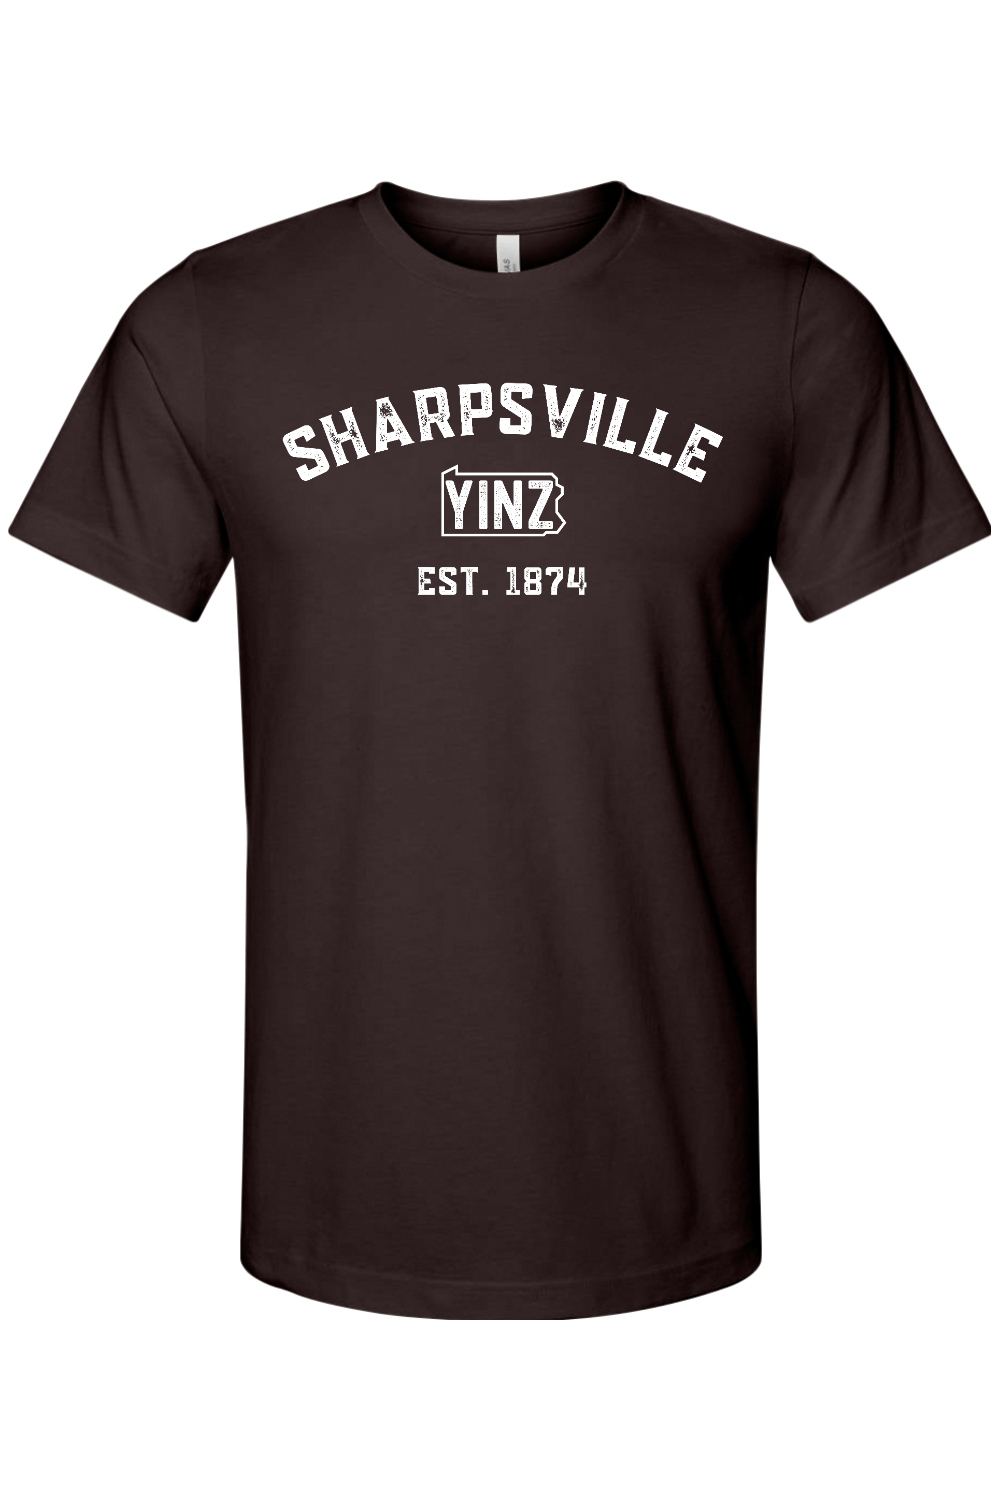 Sharpsville Yinzylvania - Yinzylvania